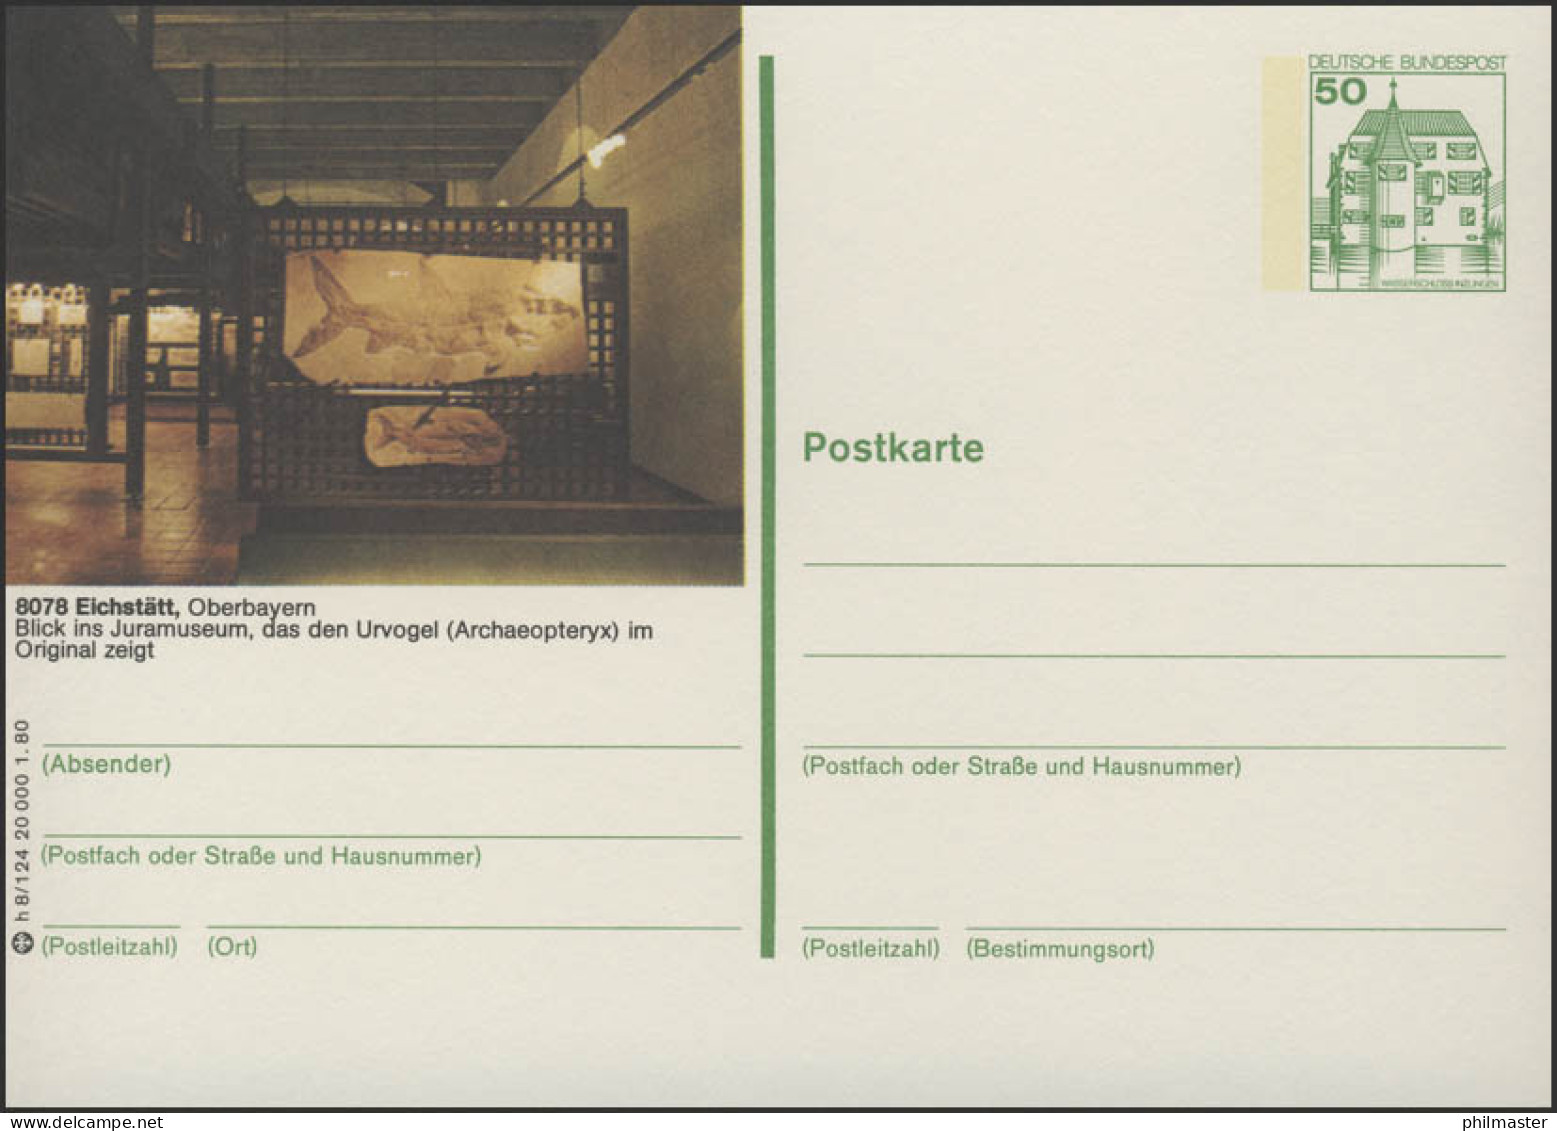 P130-h8/124 - 8078 Eichstädt, Jura-Museum ** - Postales Ilustrados - Nuevos